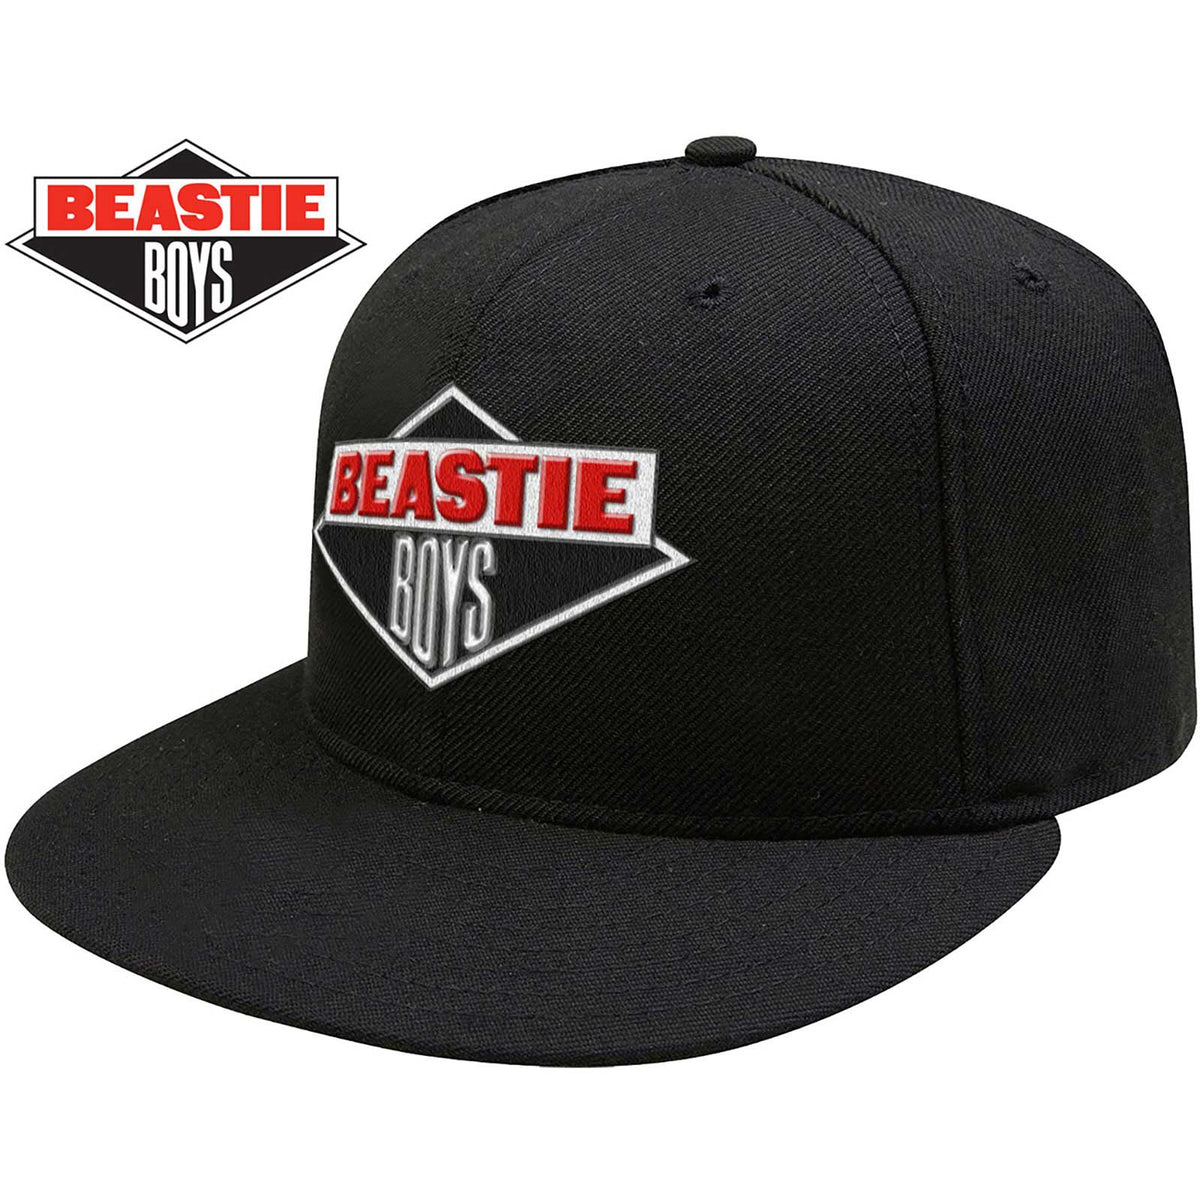 Die Beastie Boys Snapback Cap – Diamond Logo – Offizielles Produkt